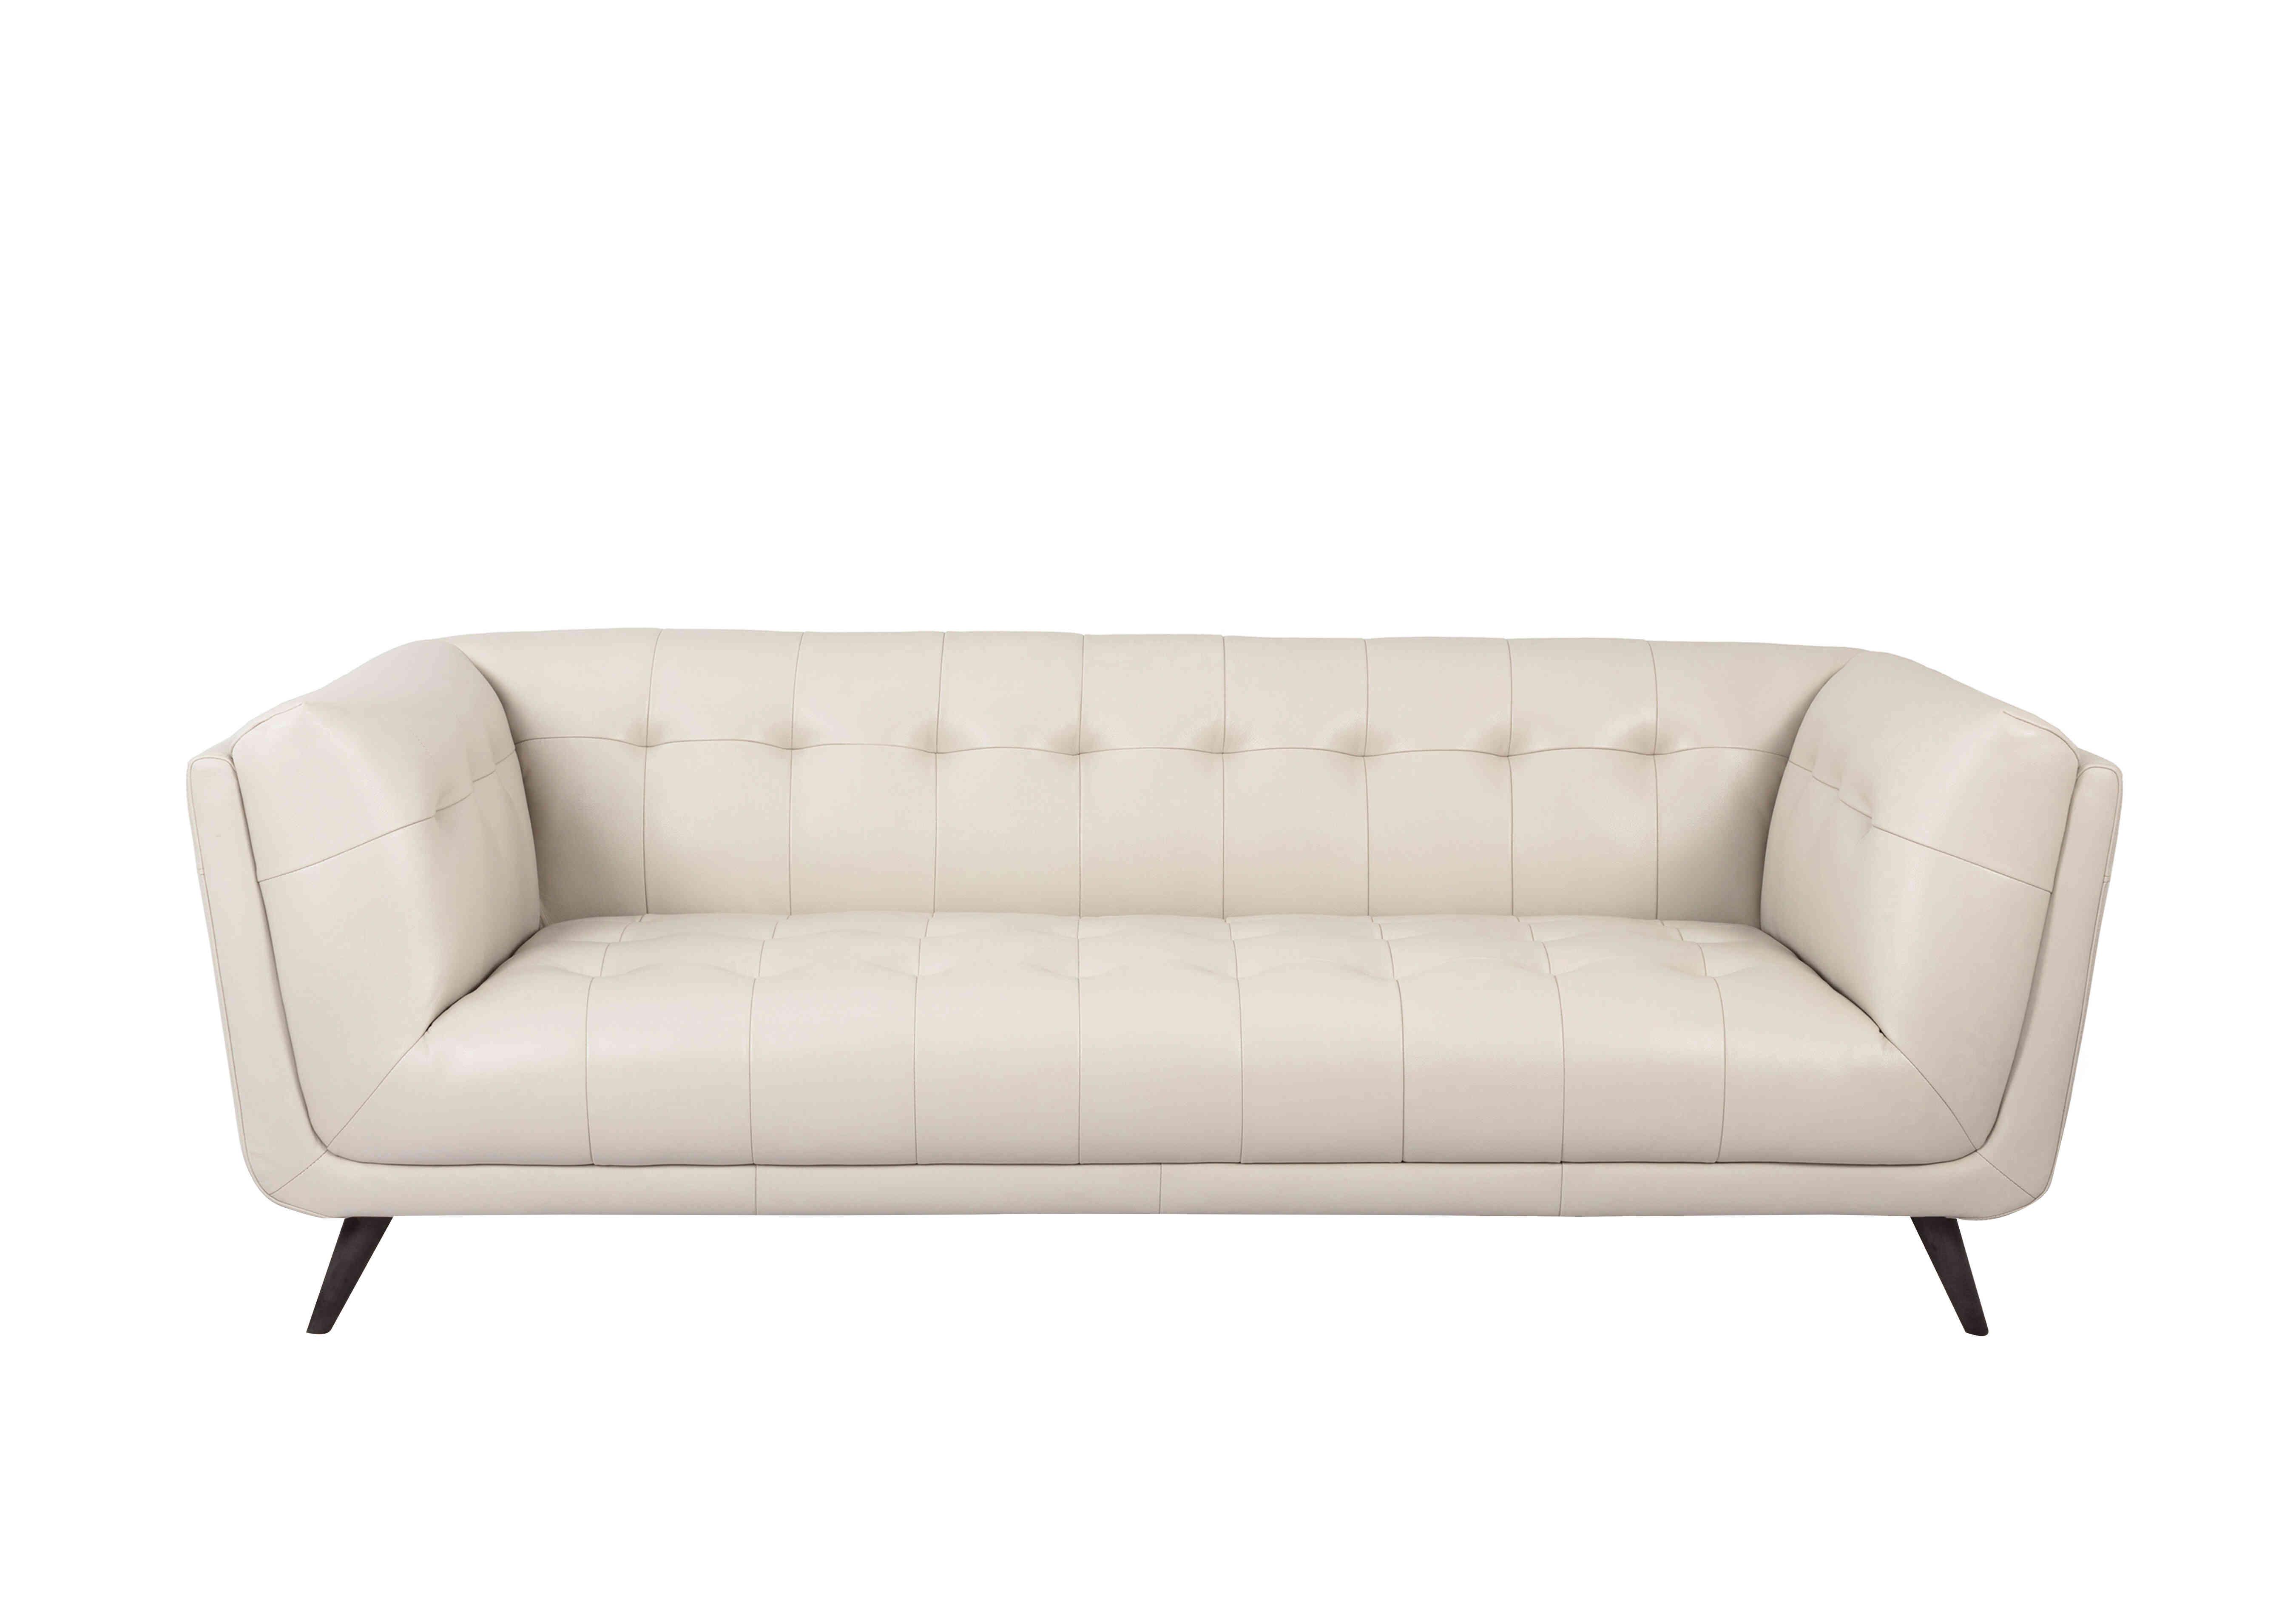 Rene 3 Seater Leather Sofa in Montana Cotton on Furniture Village